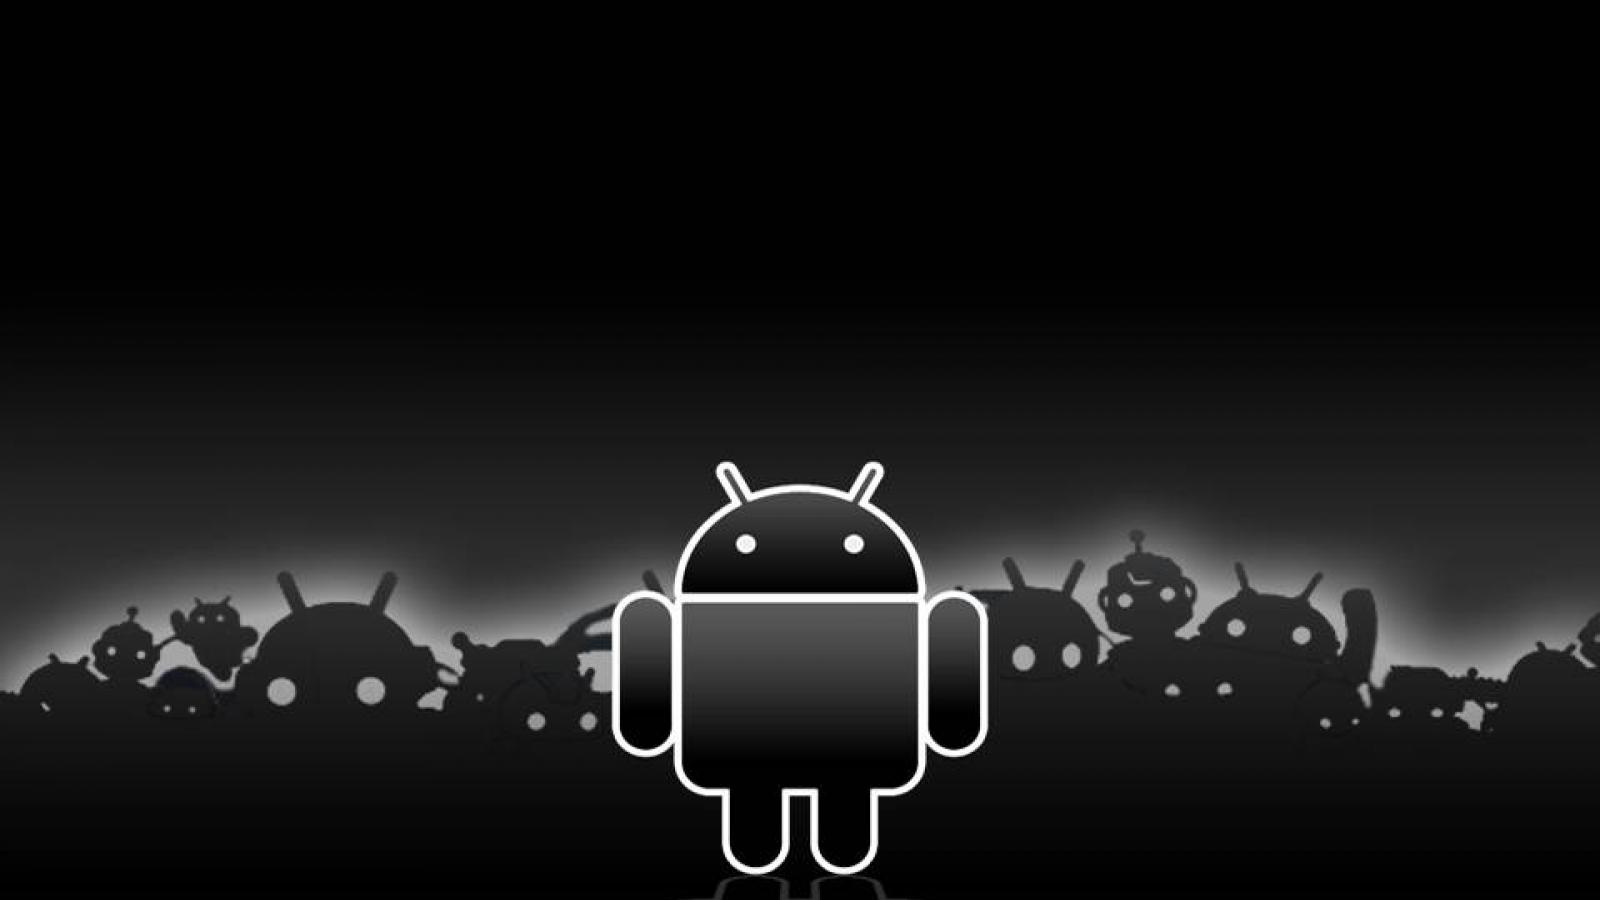 Dark Android Image #14920 Wallpaper | High Resolution Wallarthd.com